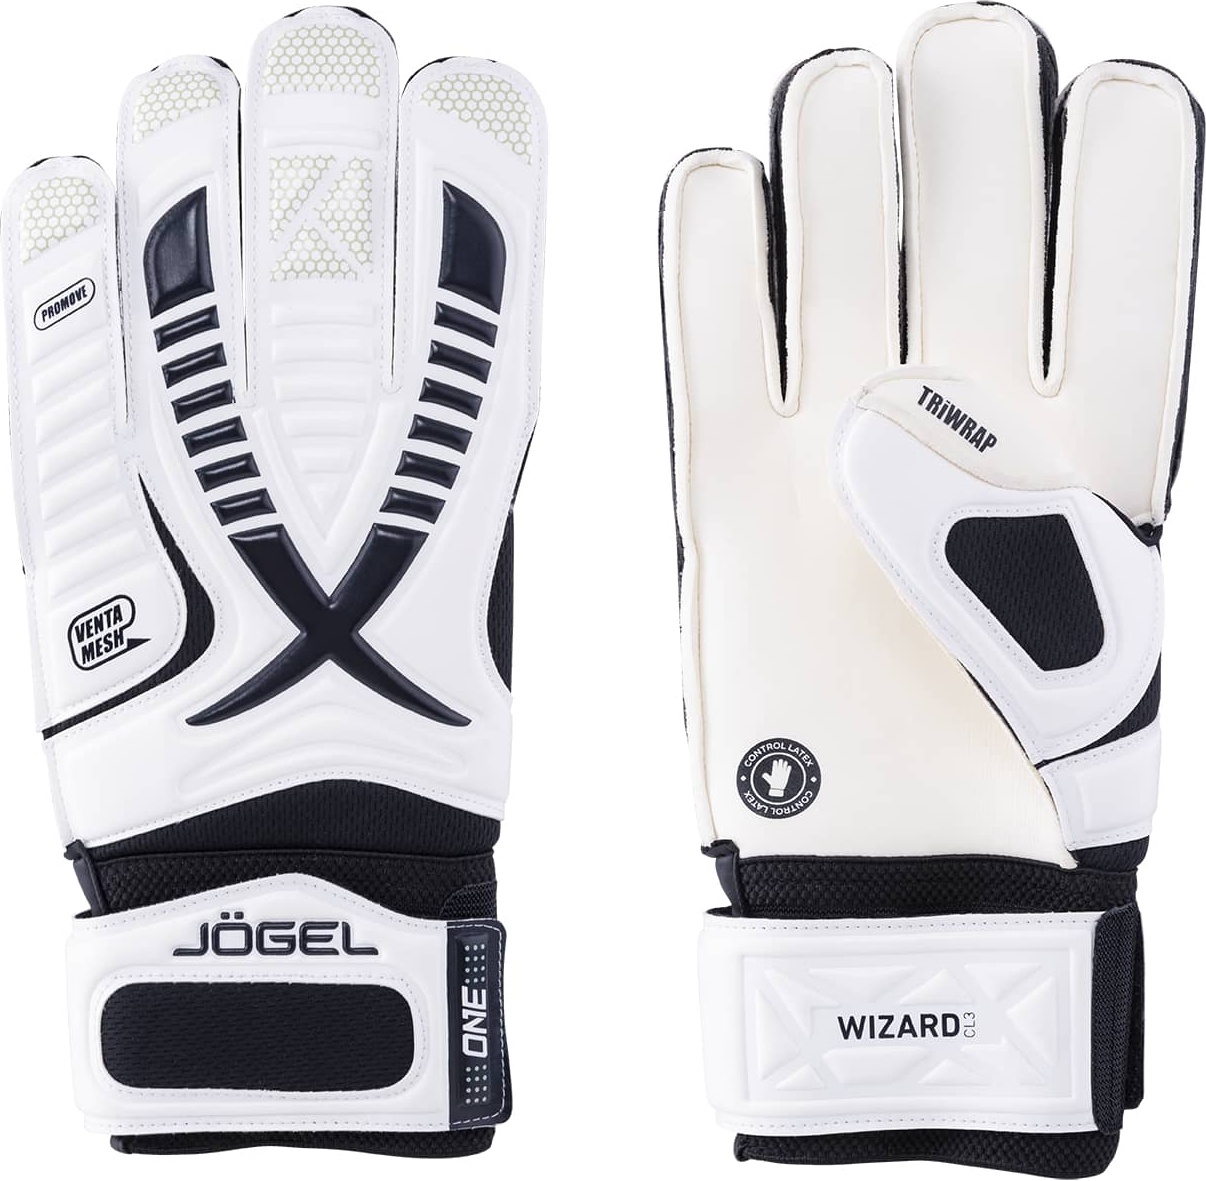 Вратарские перчатки Jogel One Wizard CL3 Flat, white/black, 9